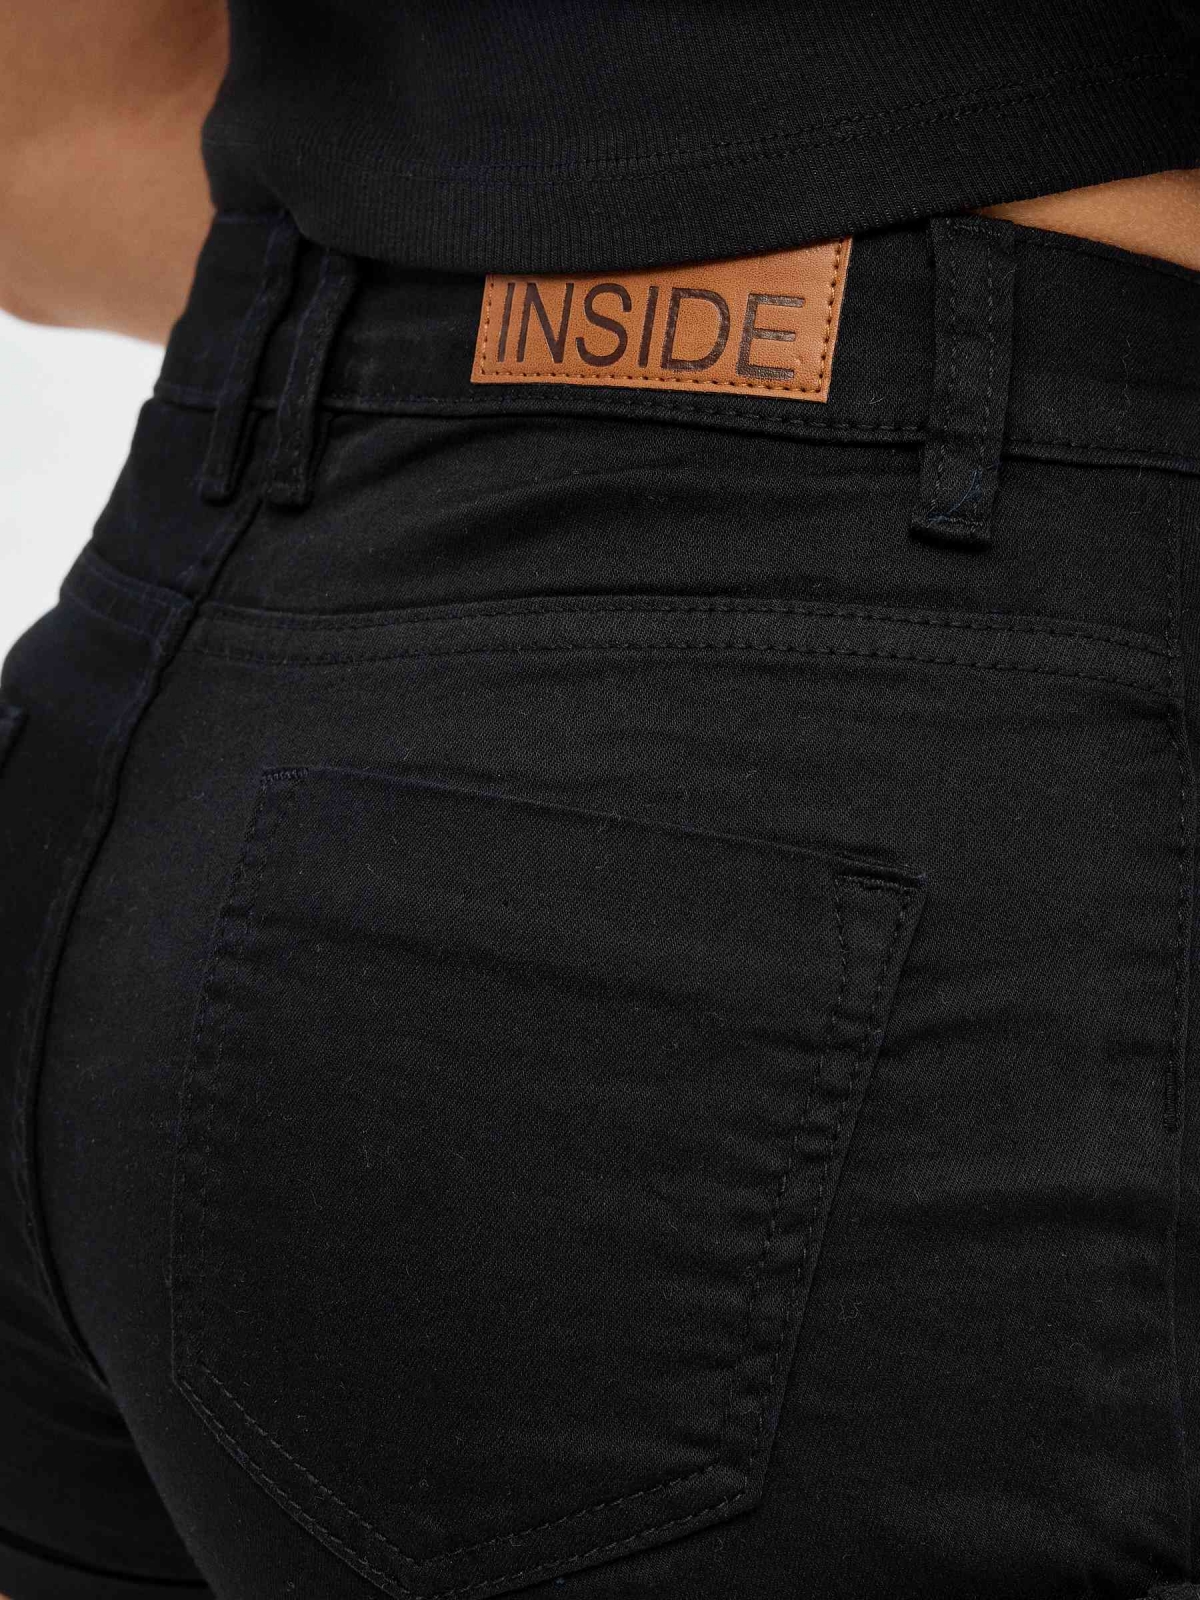 Shorts de sarja coloridos preto vista detalhe